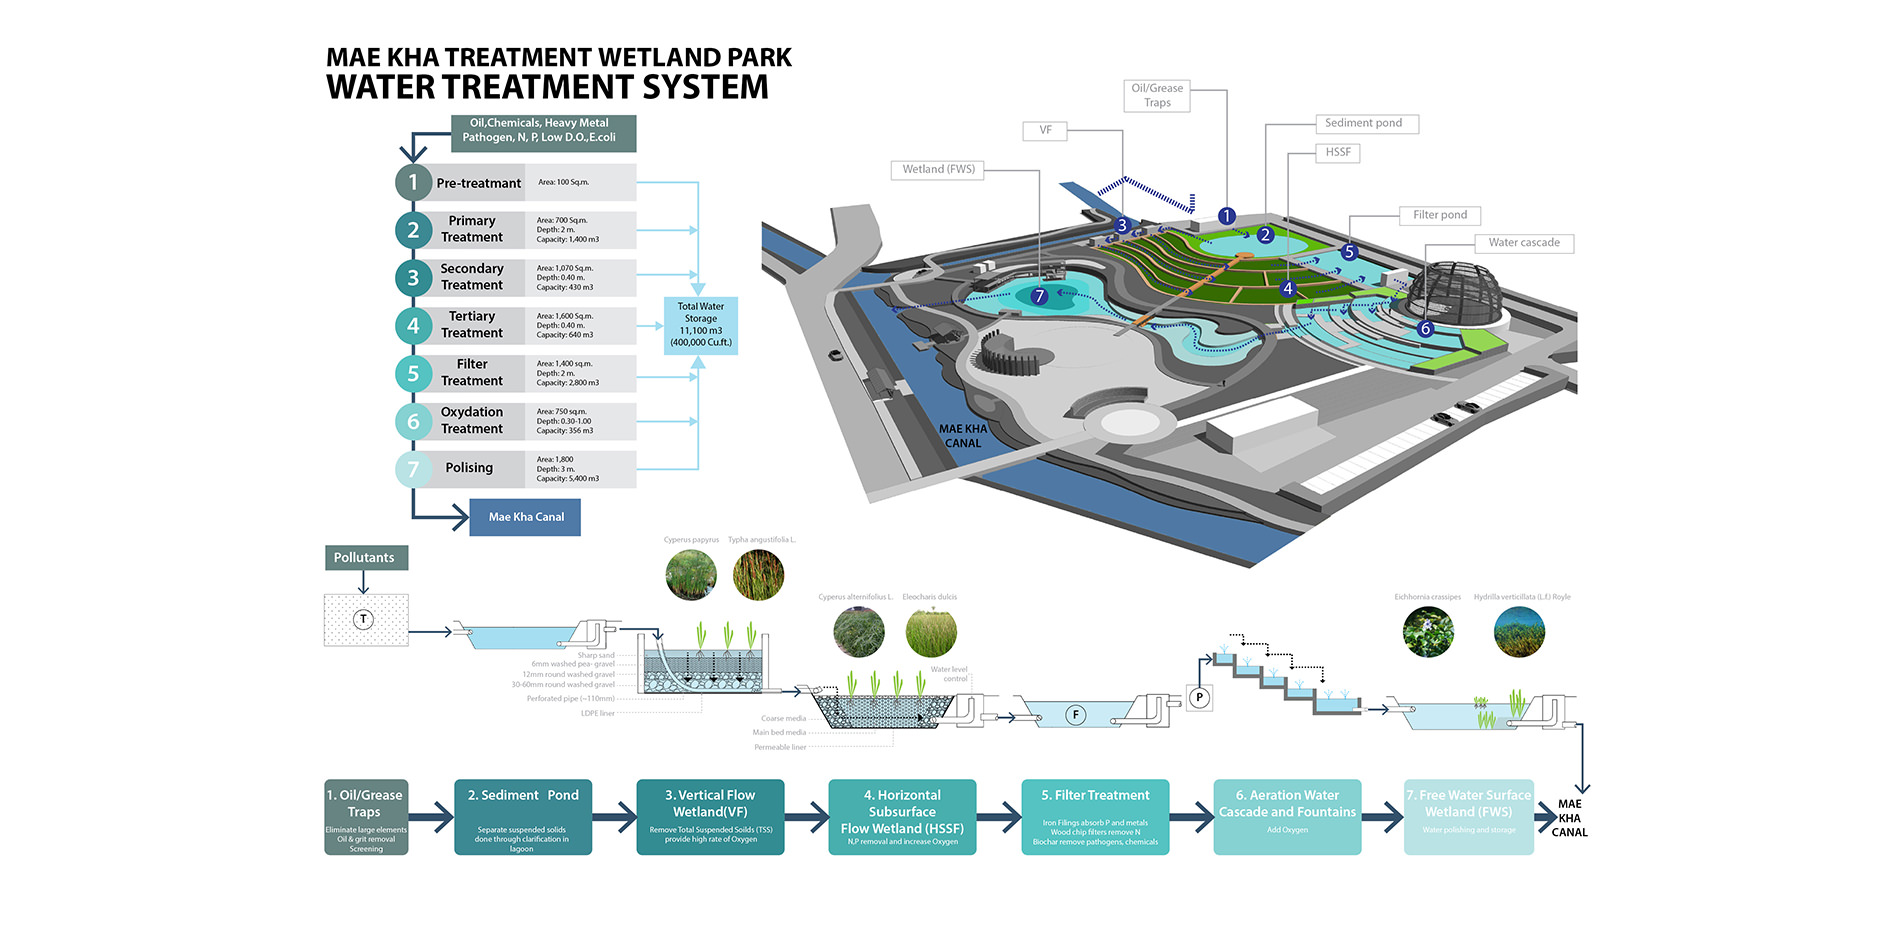 Mae Kha treatment wetland park water treatment system design